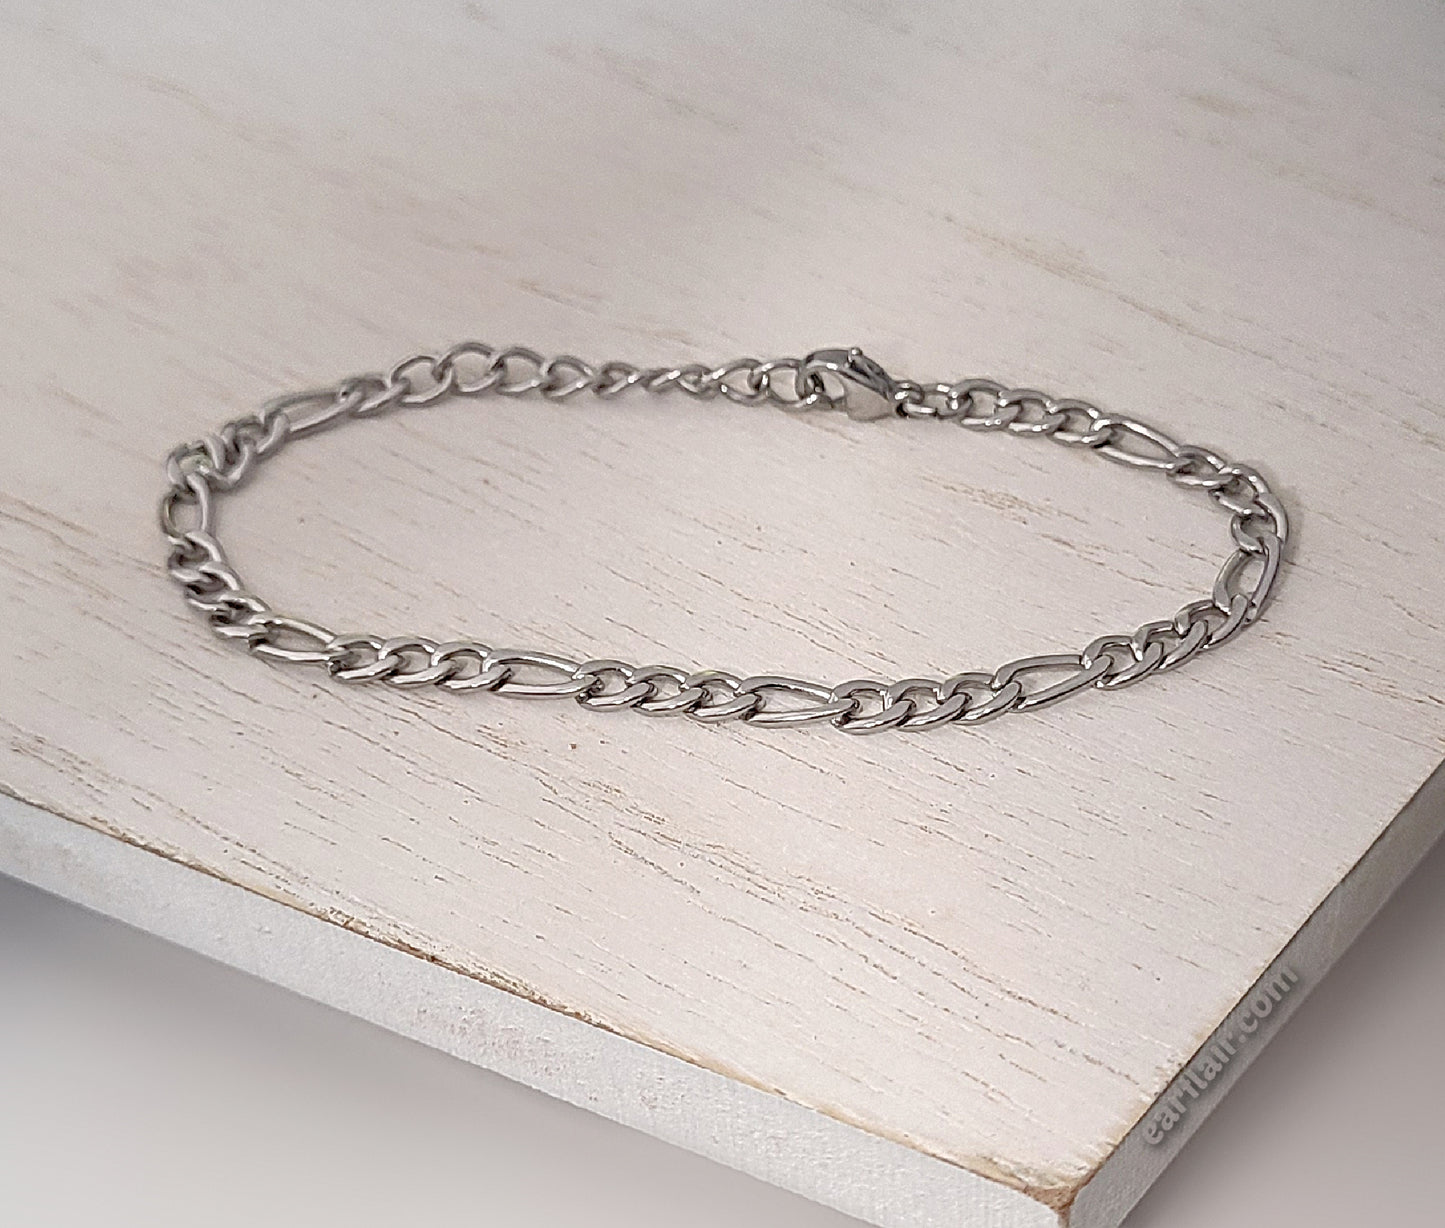 Stainless Steel Adjustable Figaro Bracelet / Anklet